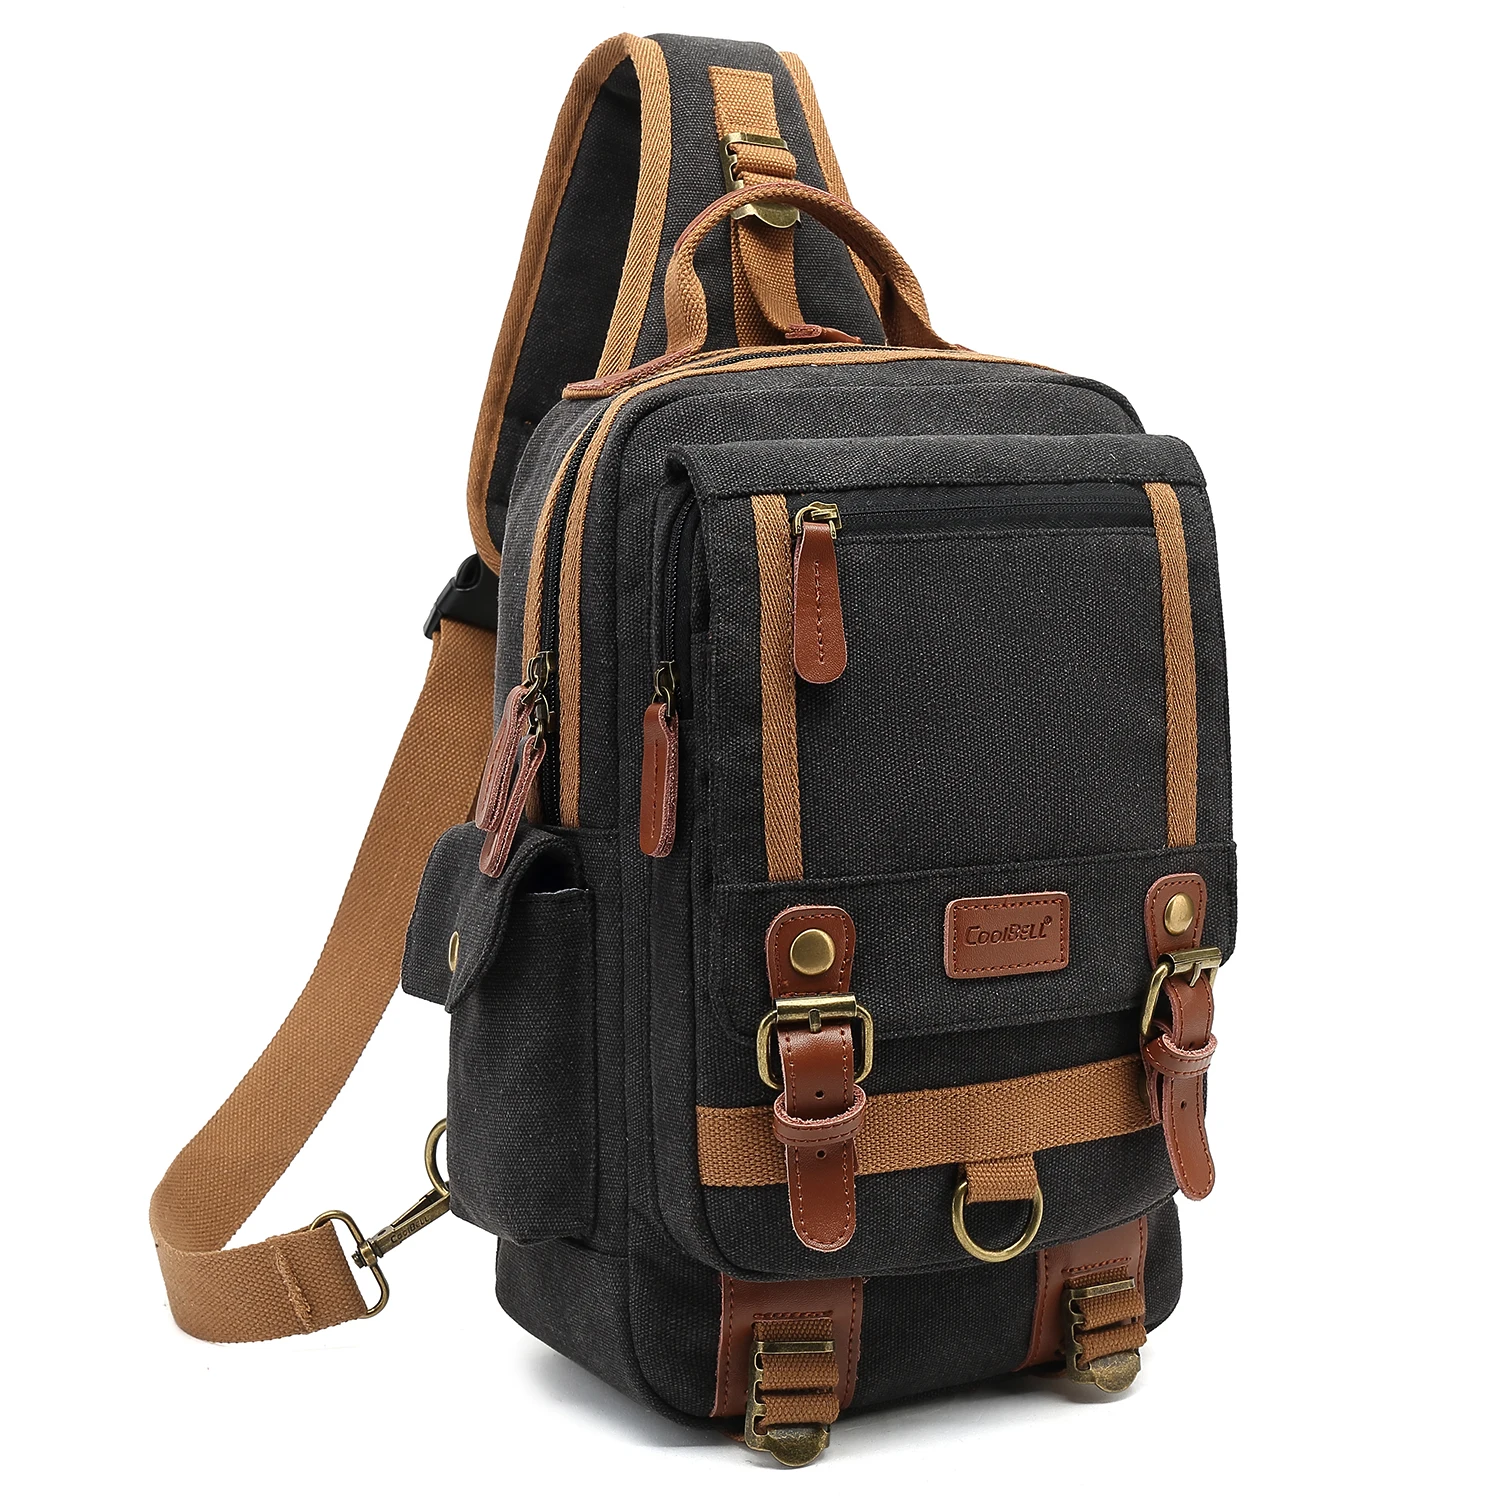 

CoolBell 13 Inches Messenger Bag Sling Backpack Nylon Shoulder Bag Waterproof Chest Pack Outdoor Cross Body Bag for Men/Women